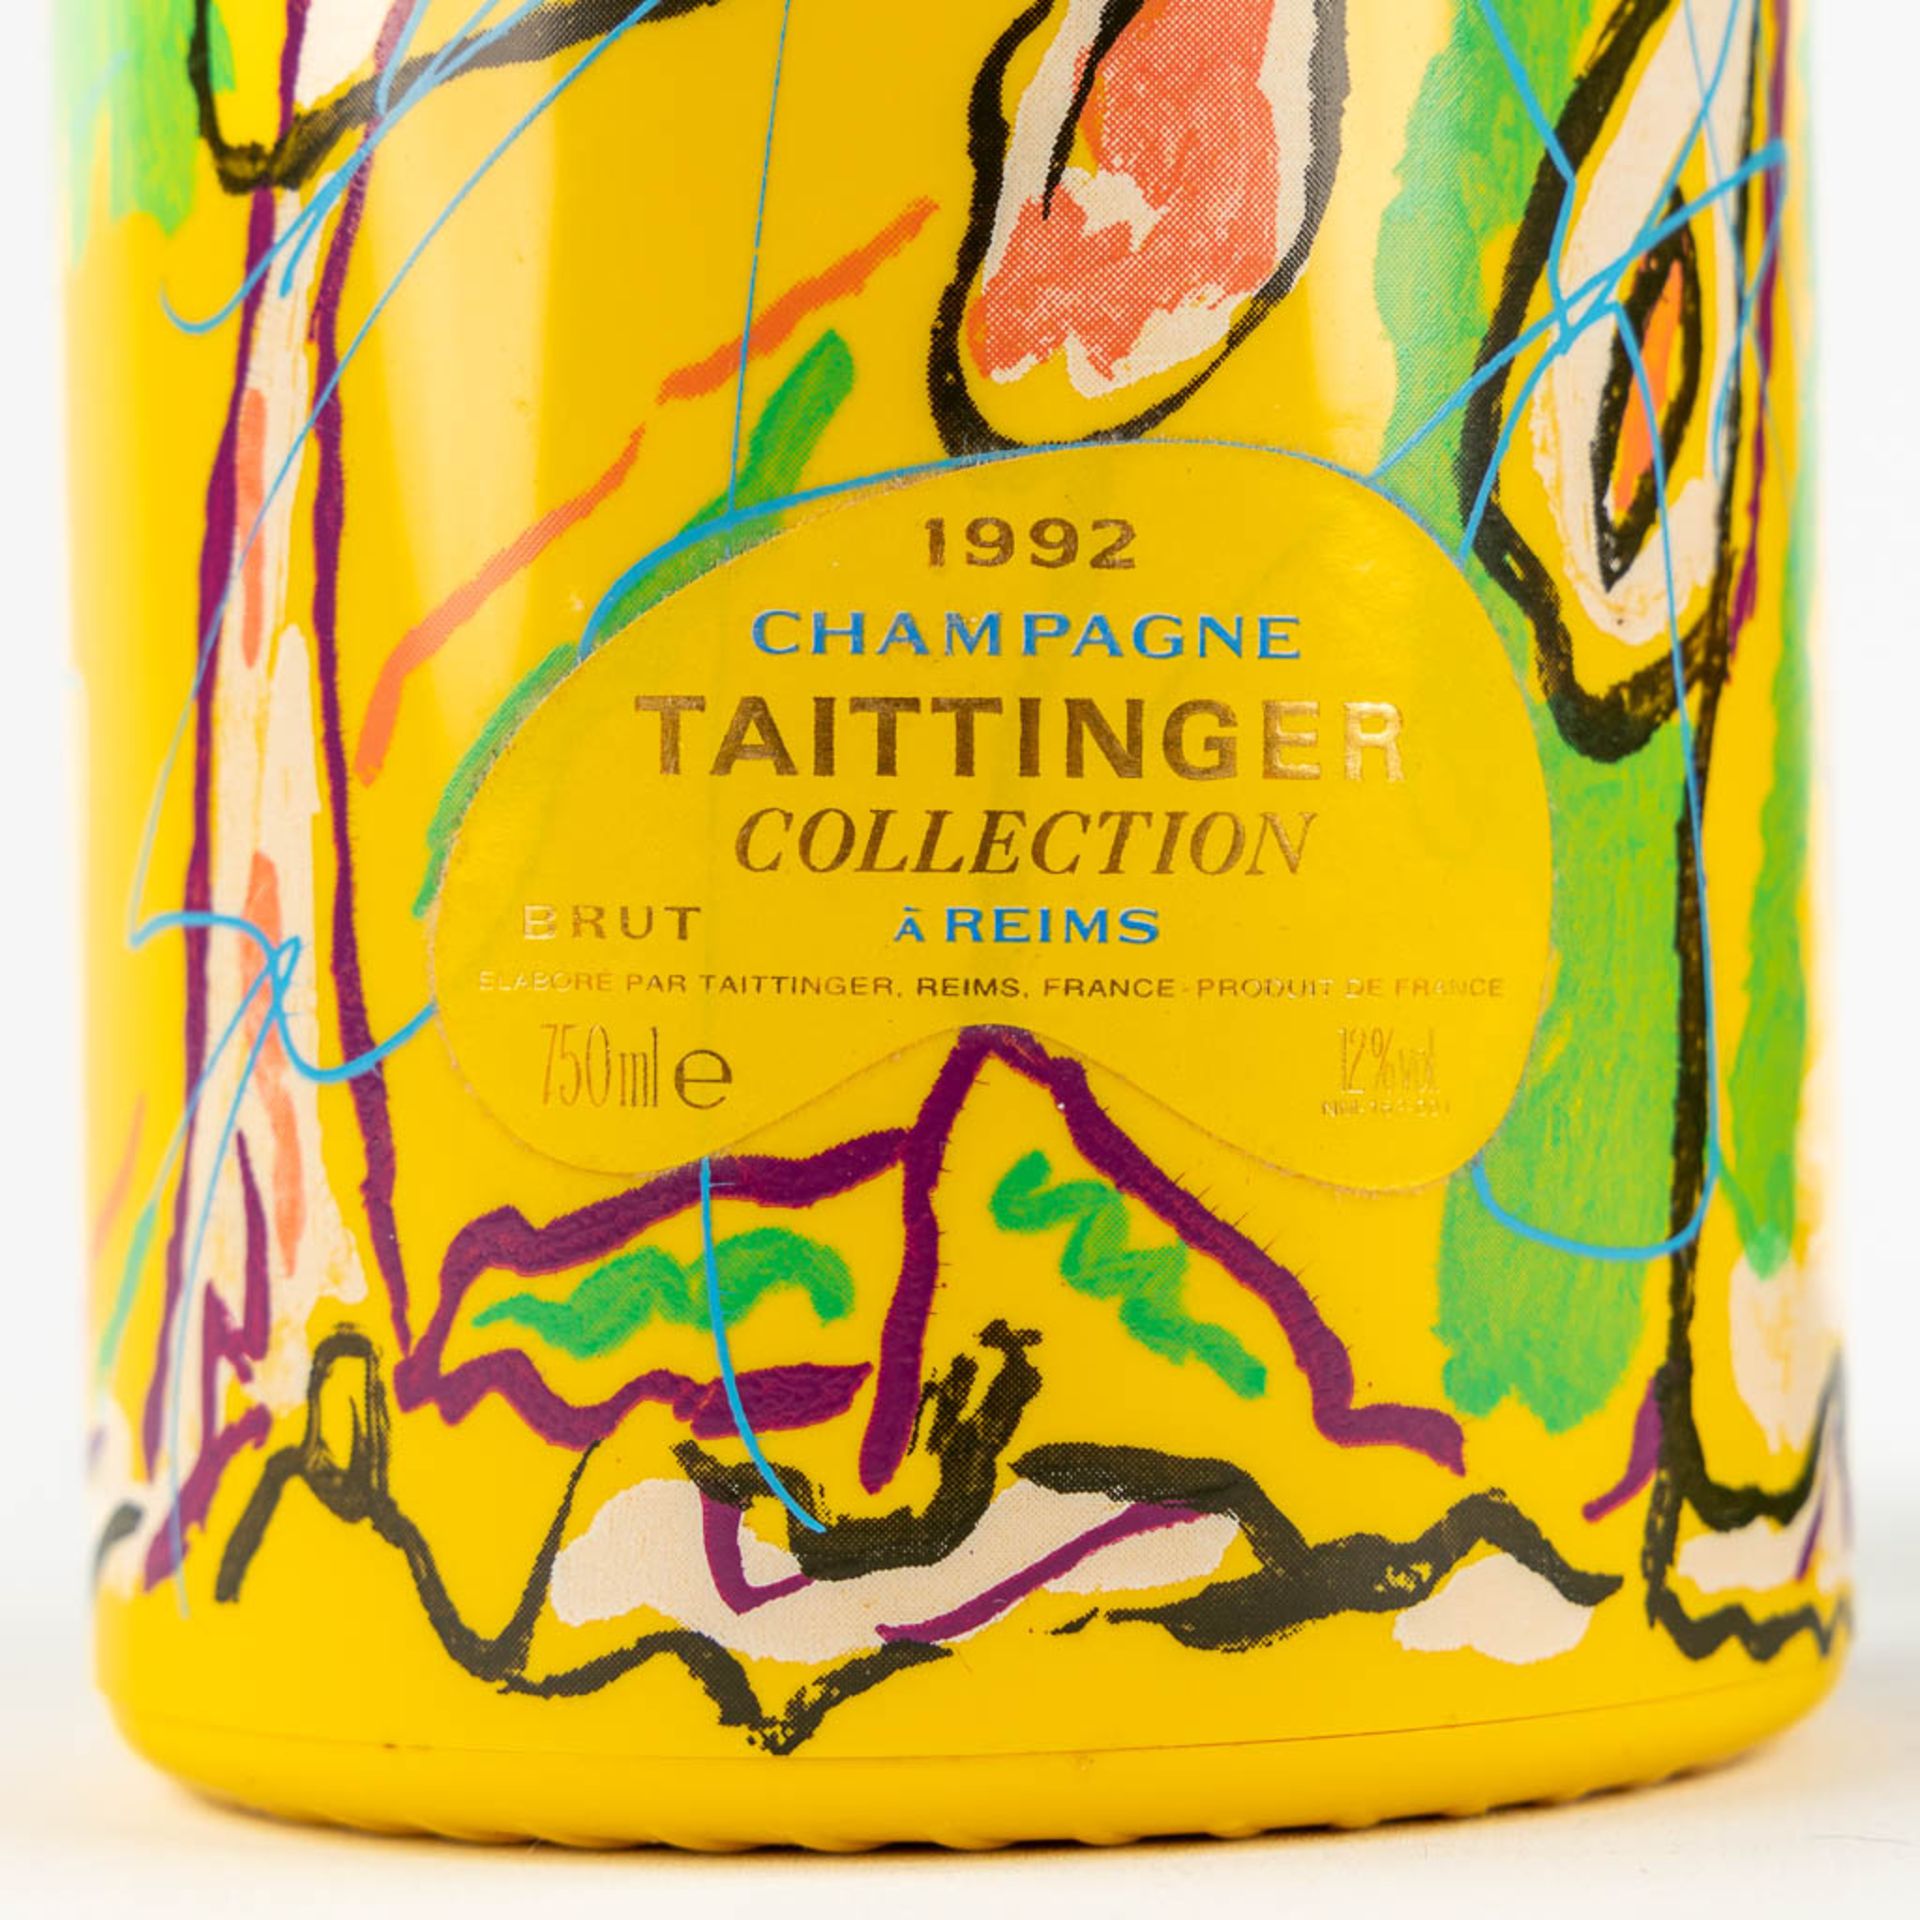 1992 Taittinger Collection Roberto Matta, Champagne - Image 2 of 3